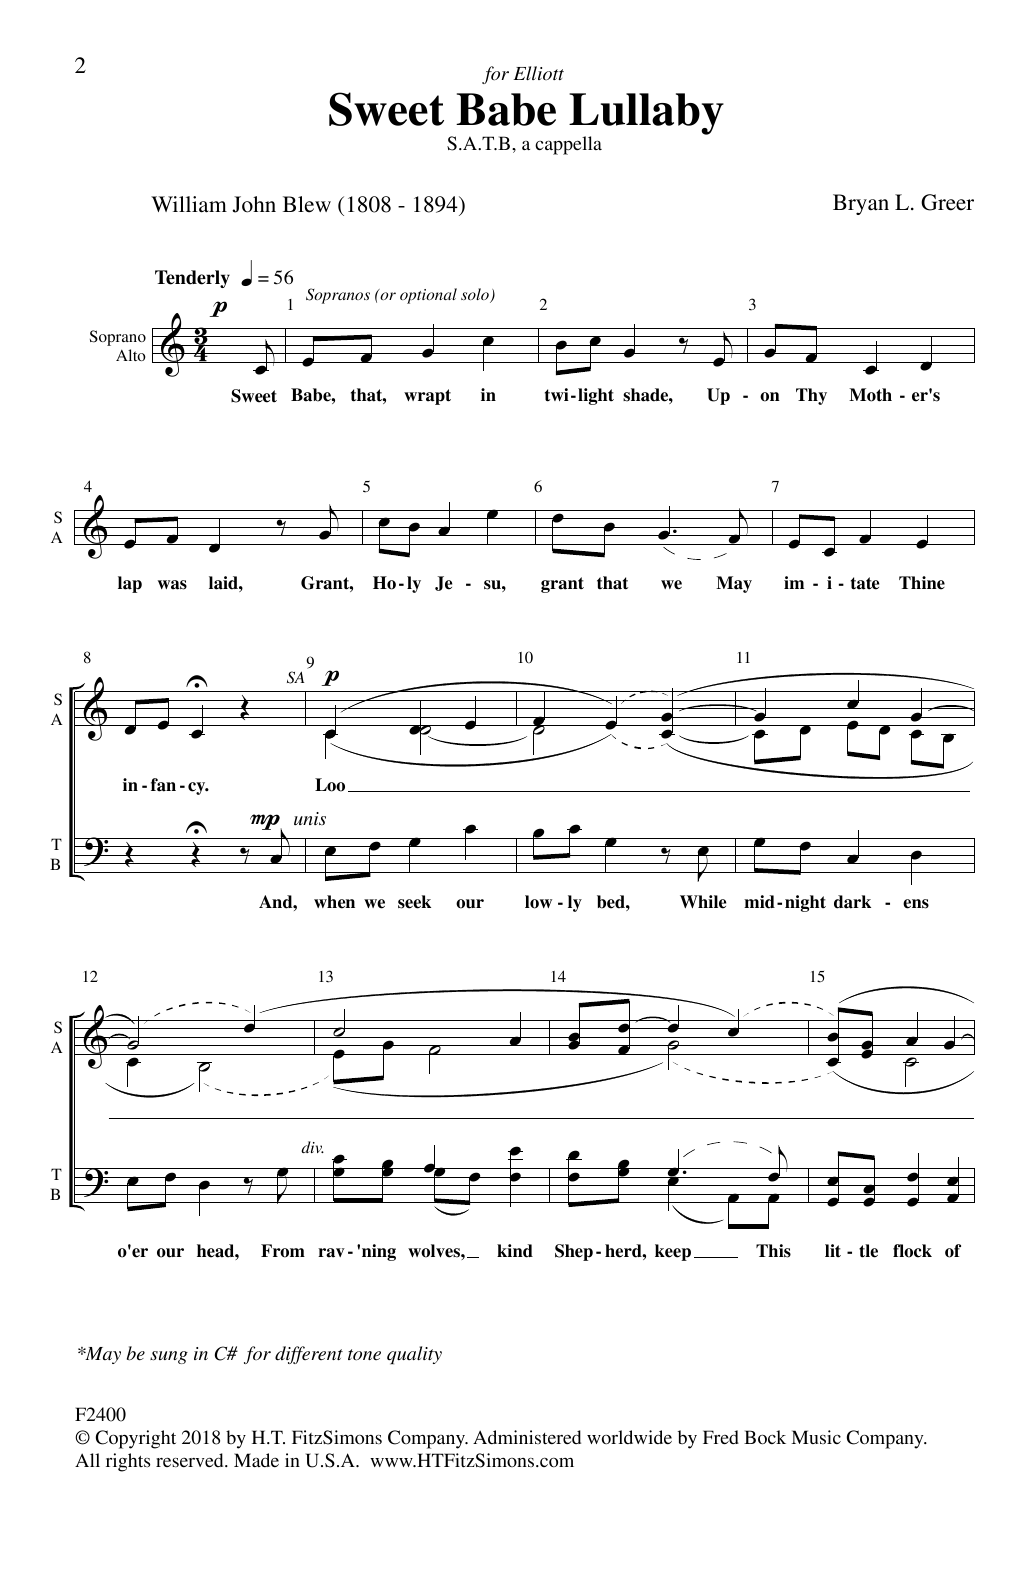 Bryan Greer Sweet Babe Lullaby Sheet Music Notes & Chords for SATB Choir - Download or Print PDF